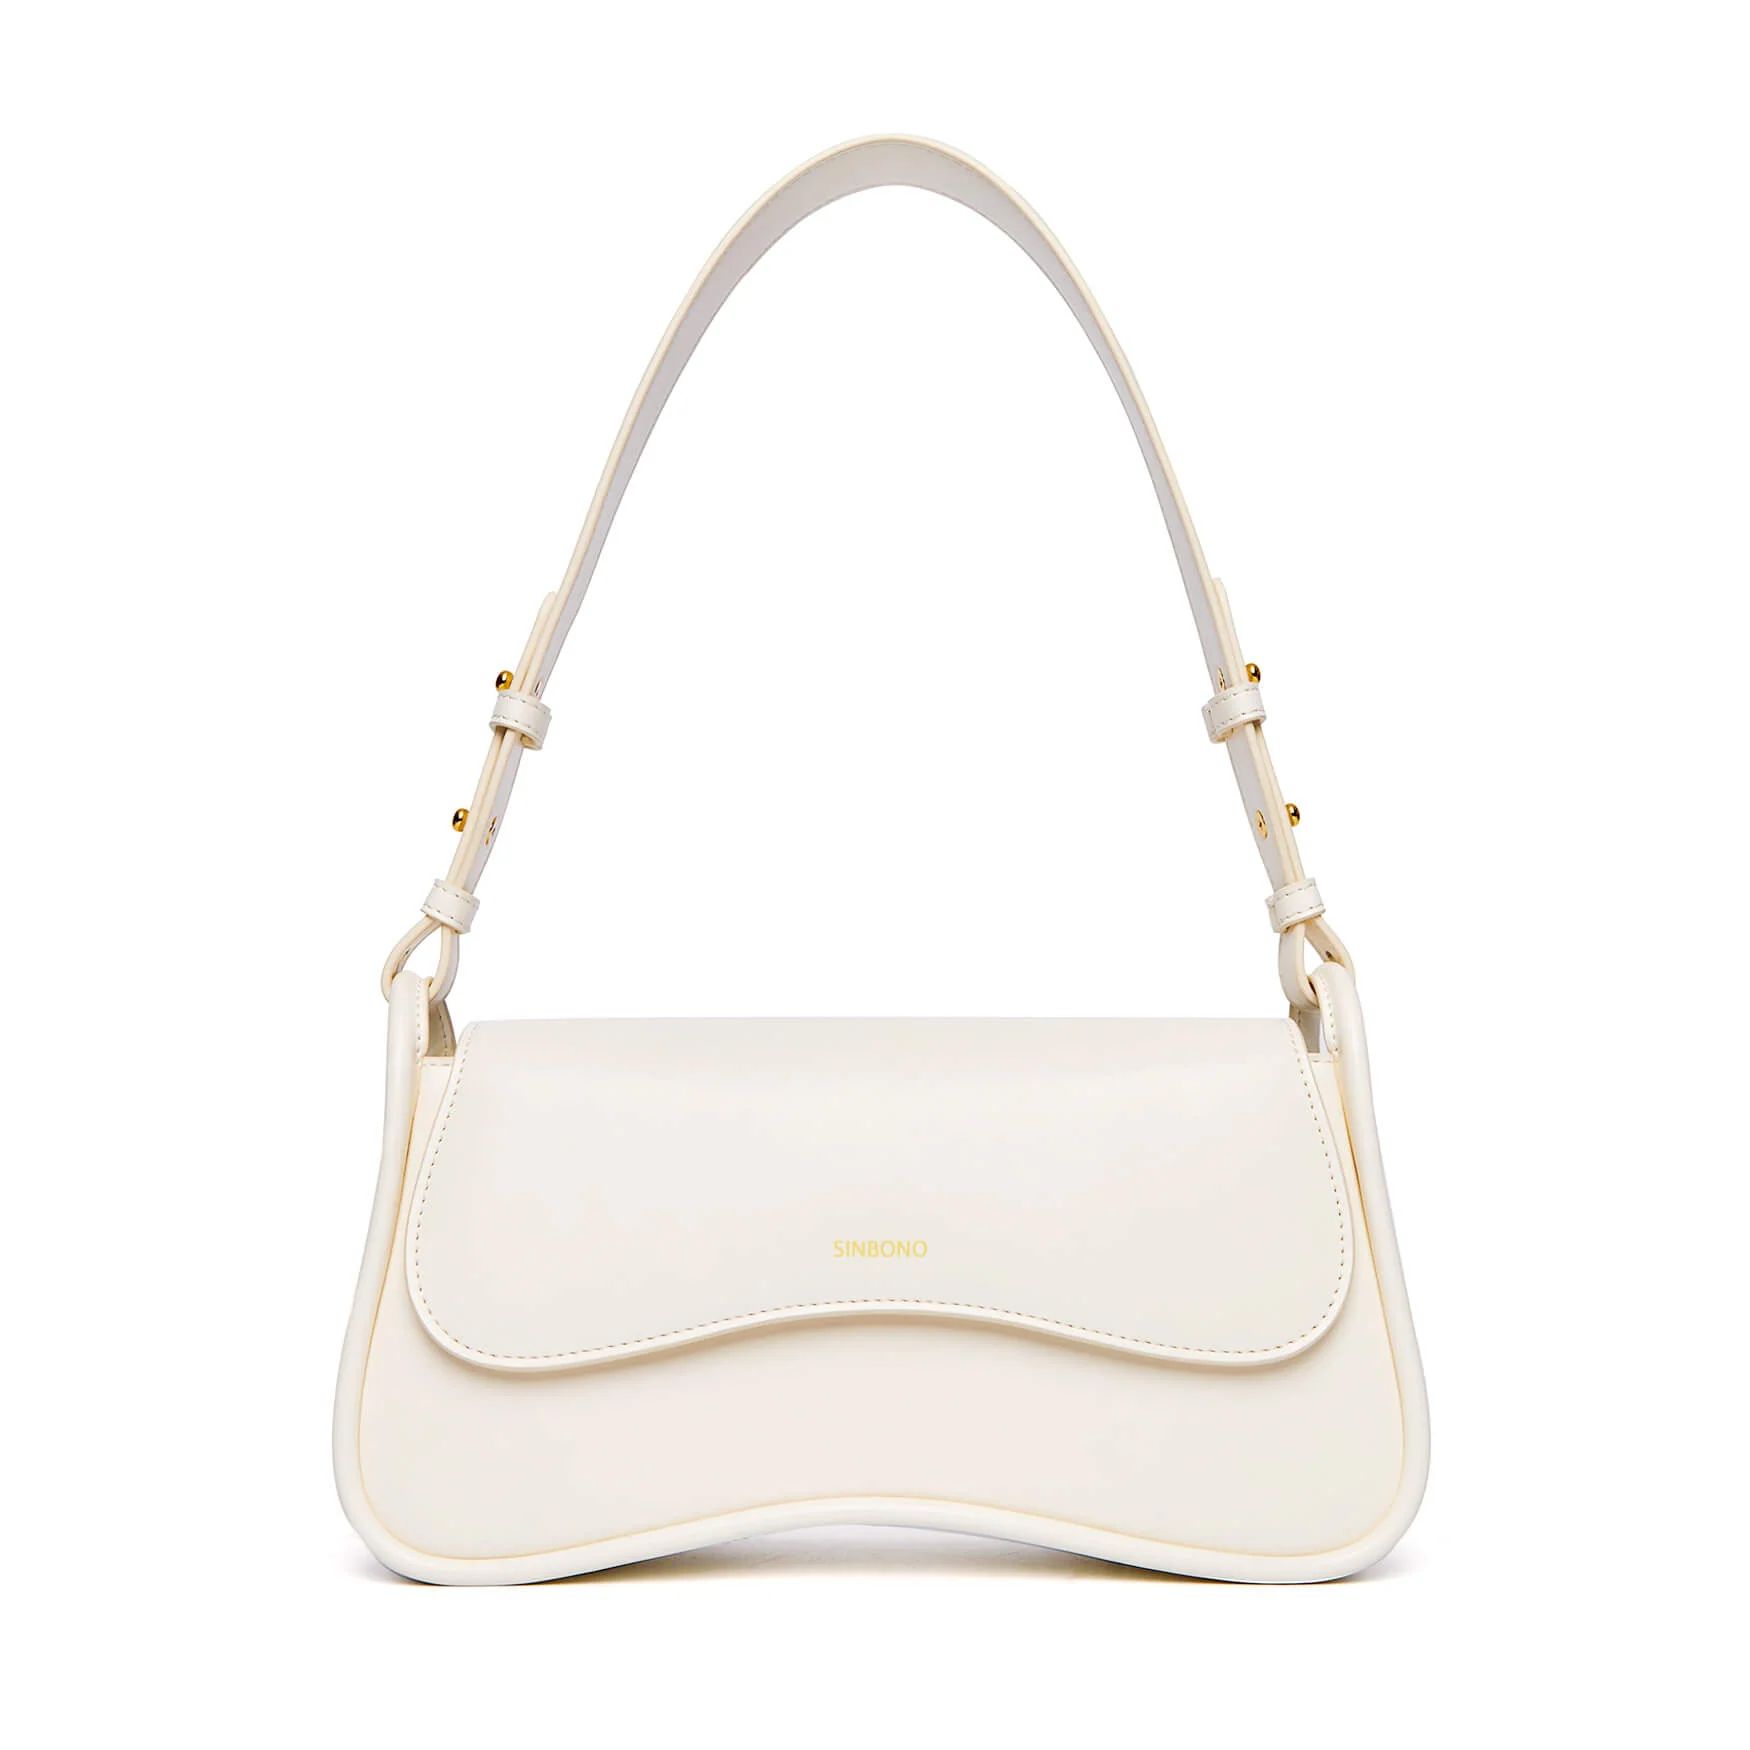 Zoe Shoulder Bag White - Leather Baguette Bag - SINBONO | SINBONO INC.